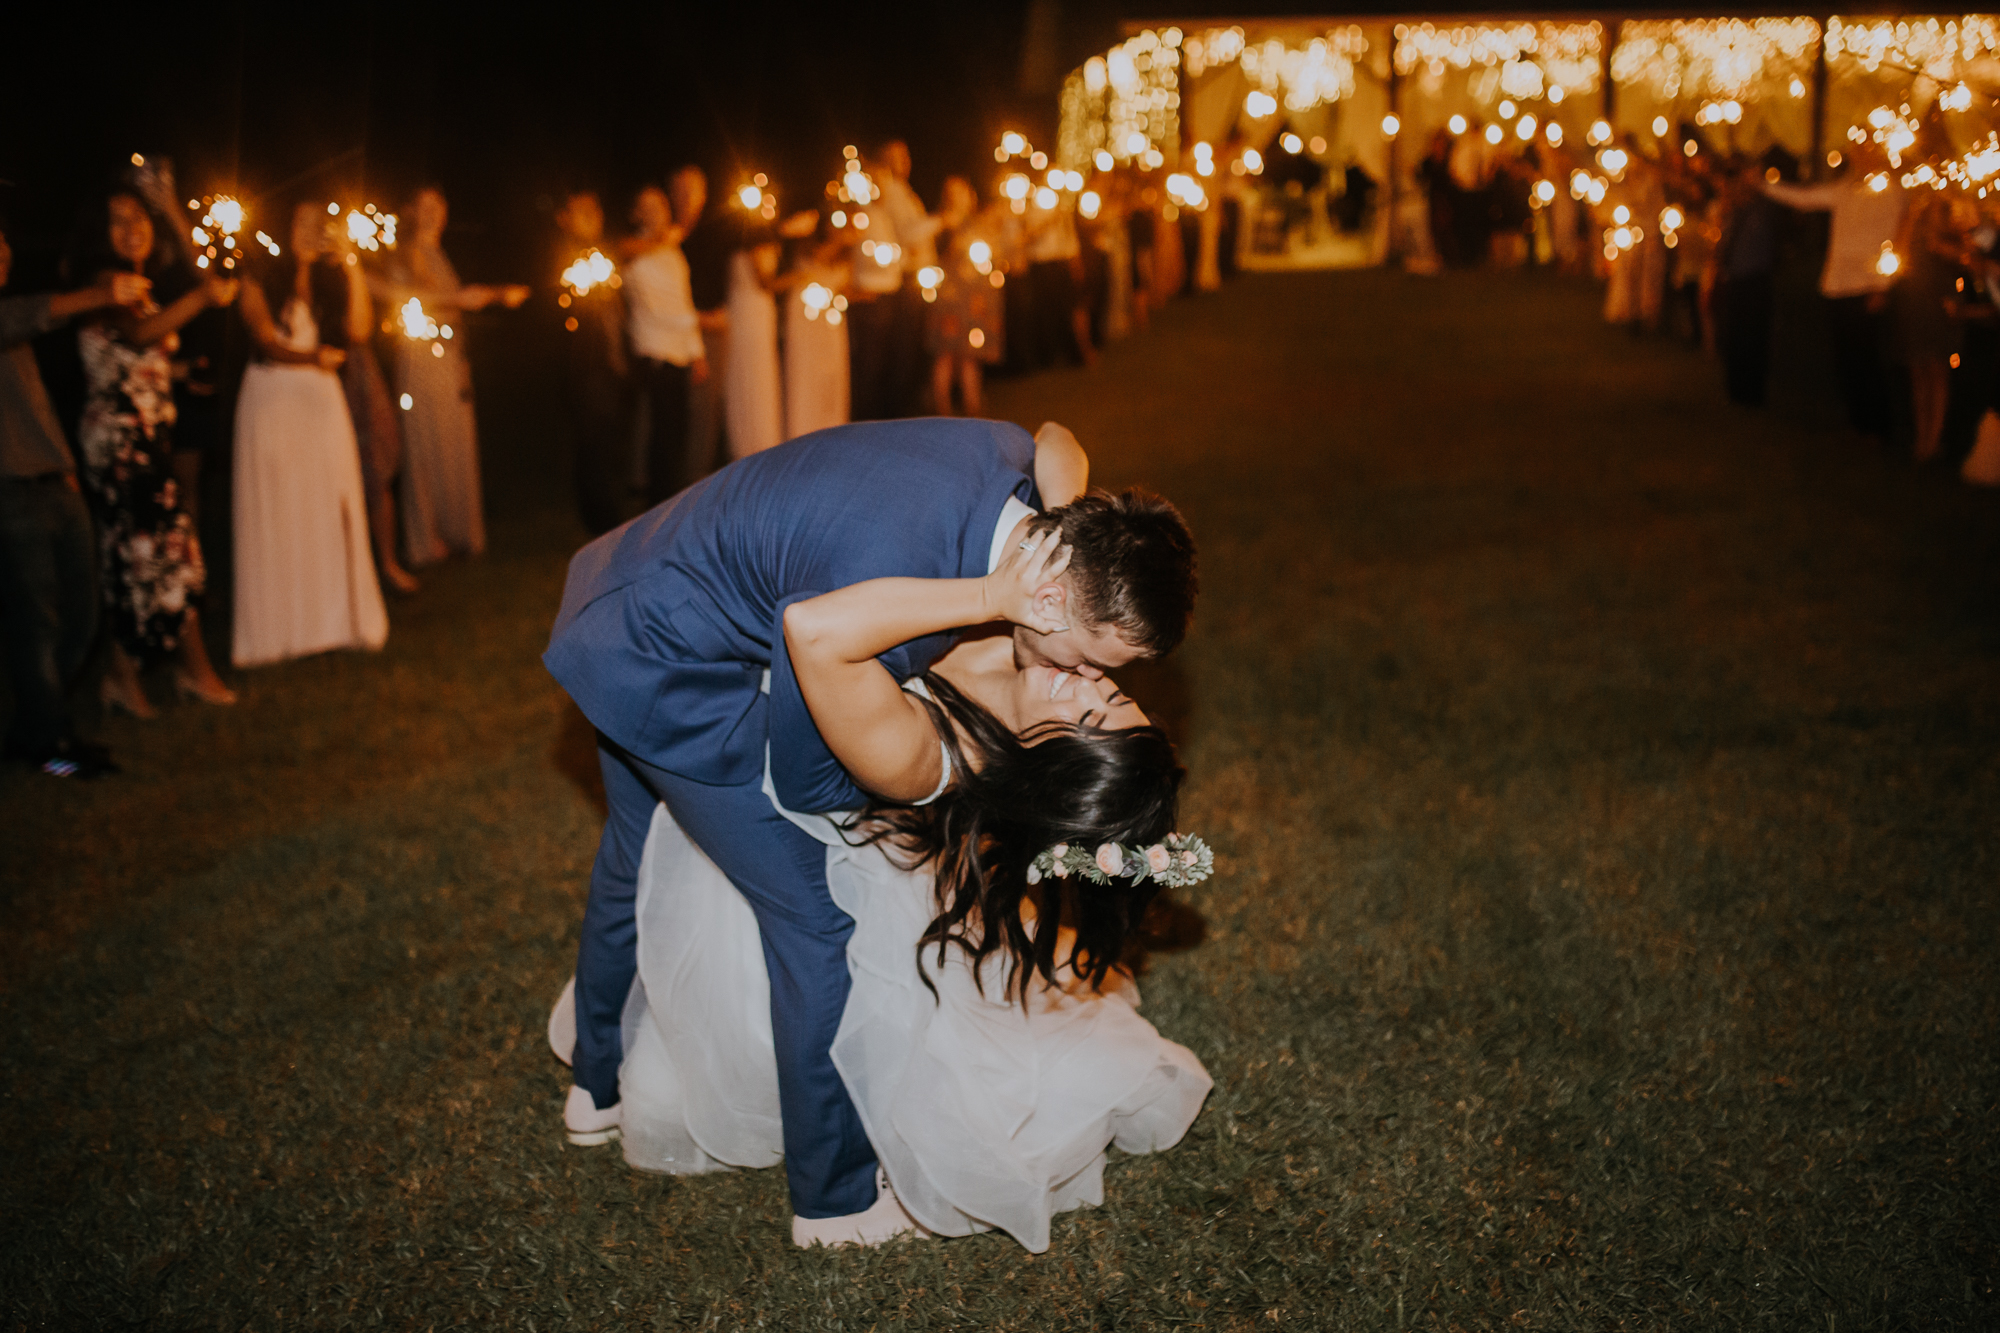 sparkler exit | wedding sparkler exit | romantic sparkler exit | outdoor Florida wedding | sarasota wedding | last kiss | dip and kiss